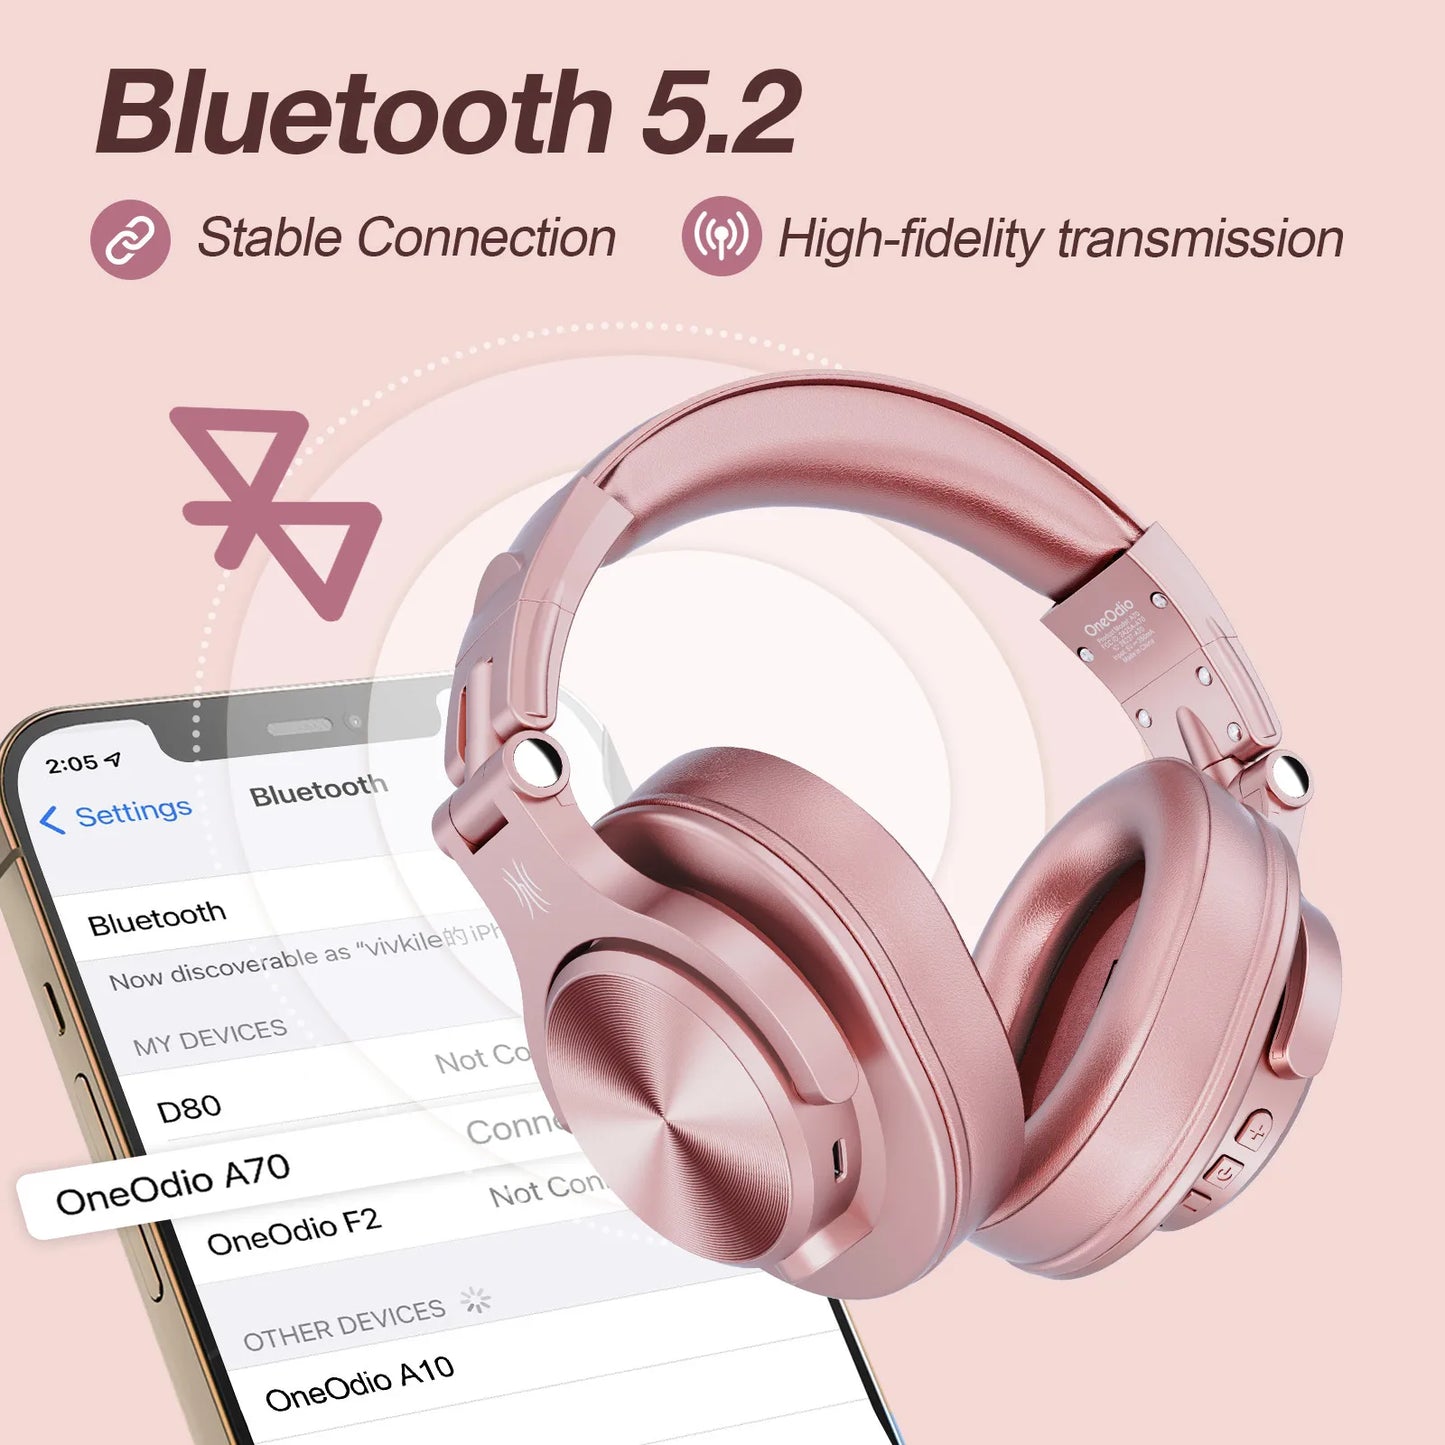 Oneodio - A70 Bluetooth 5.2 Headphones, Over Ear Wireless Headset, Professional Recording Studio DJ Headphones, 50H Playtime